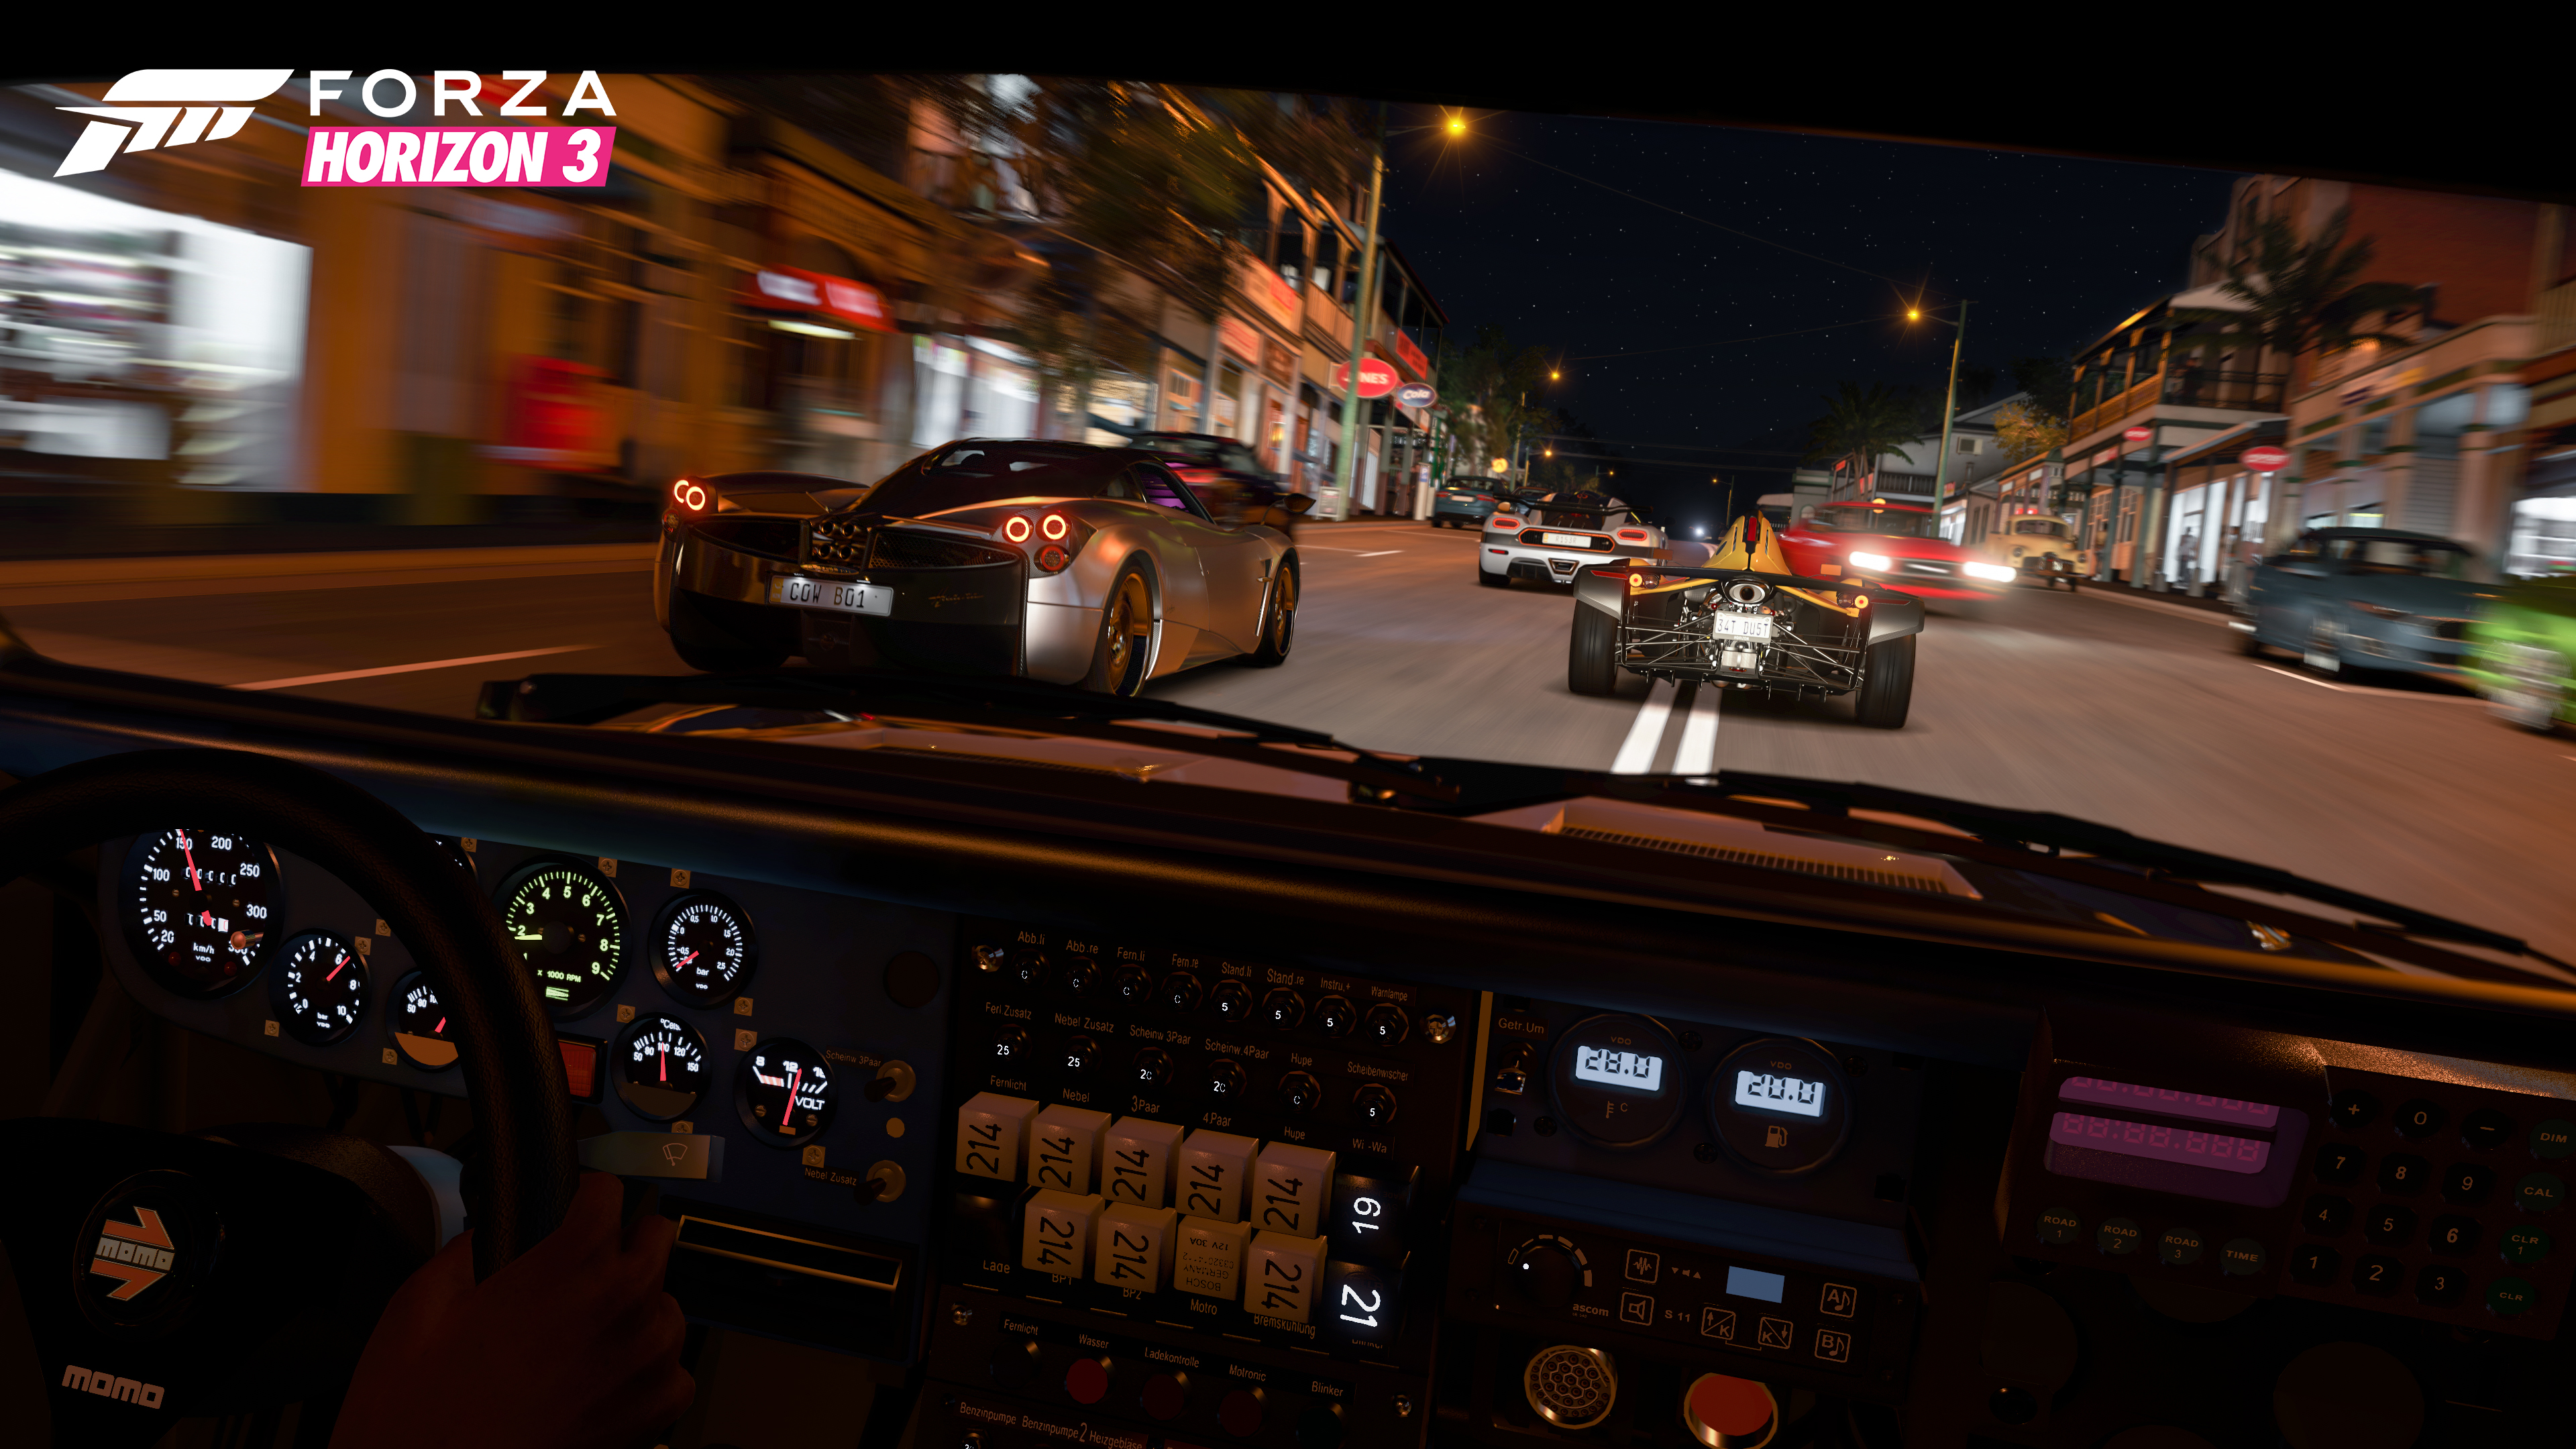 General 3840x2160 Forza Horizon 3 video games car car interior taillights headlights logo racing